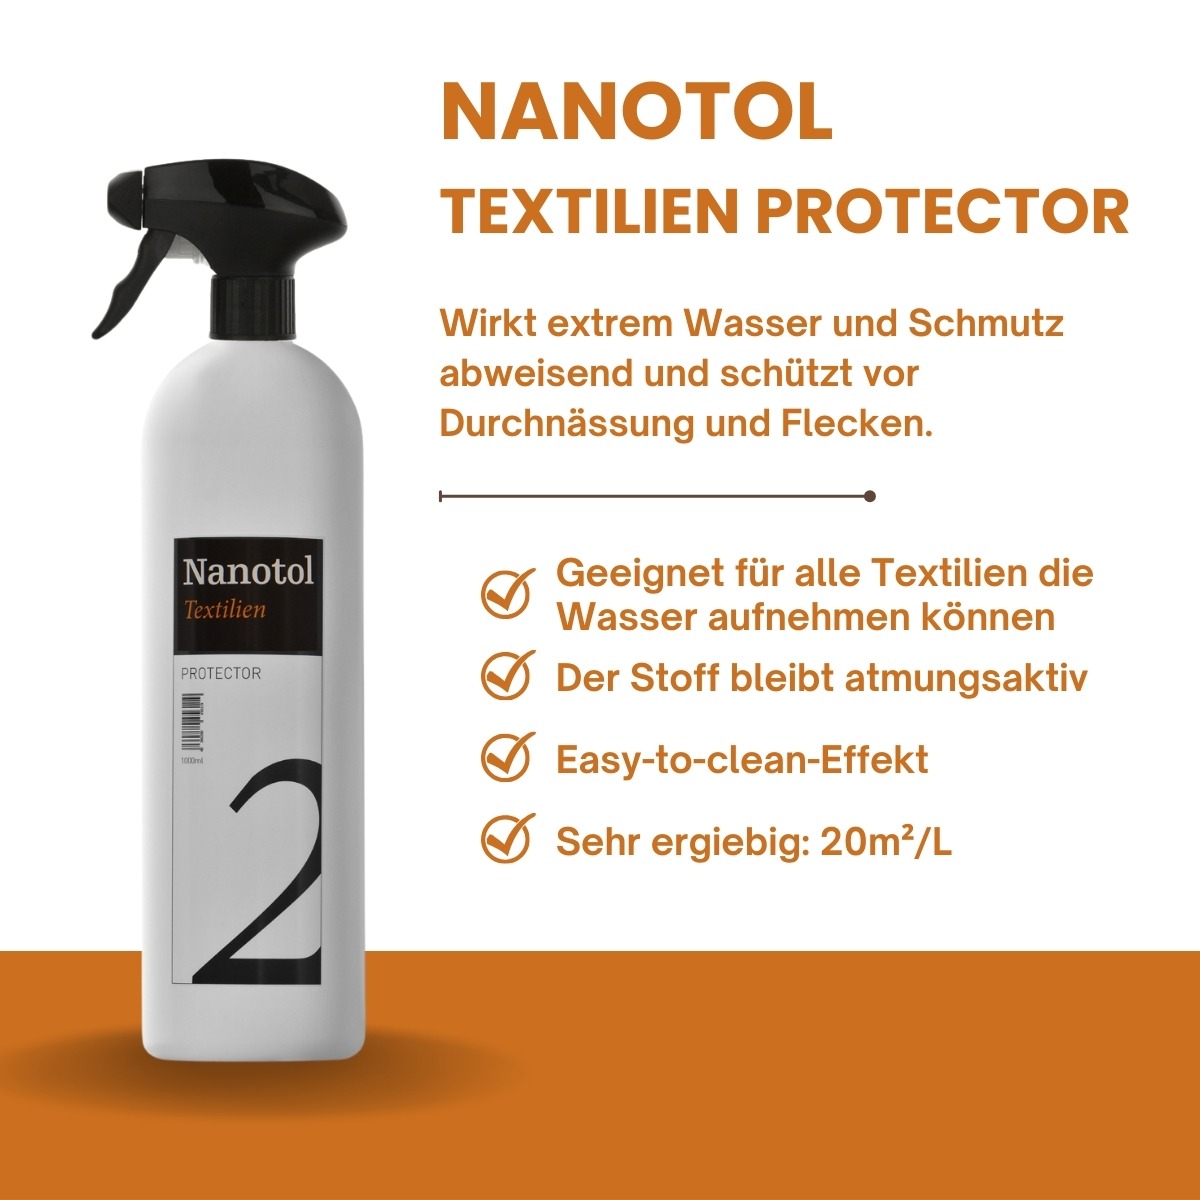 nanotol textilien protector gallery nanotol textilien protector impraegnierspray flasche vorteile